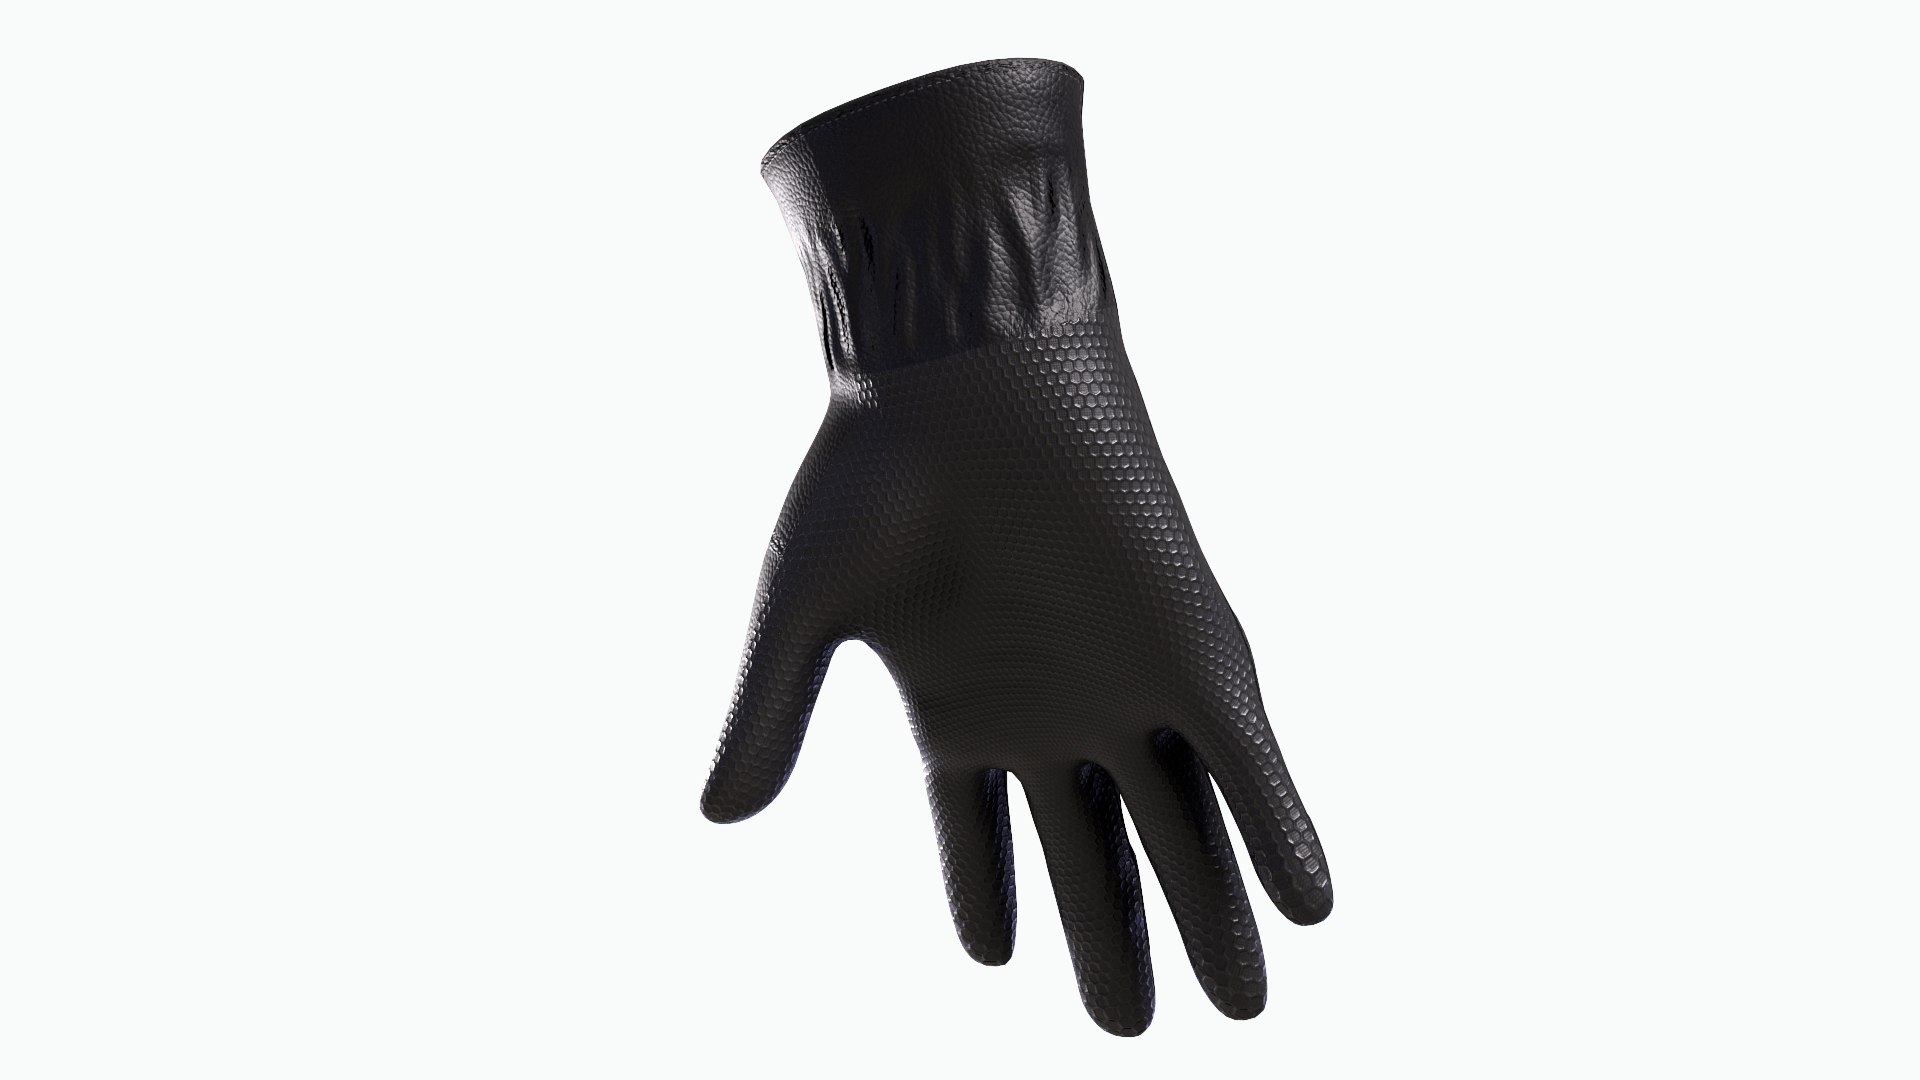 3D Model: Horse Racing Gloves Black #91423279